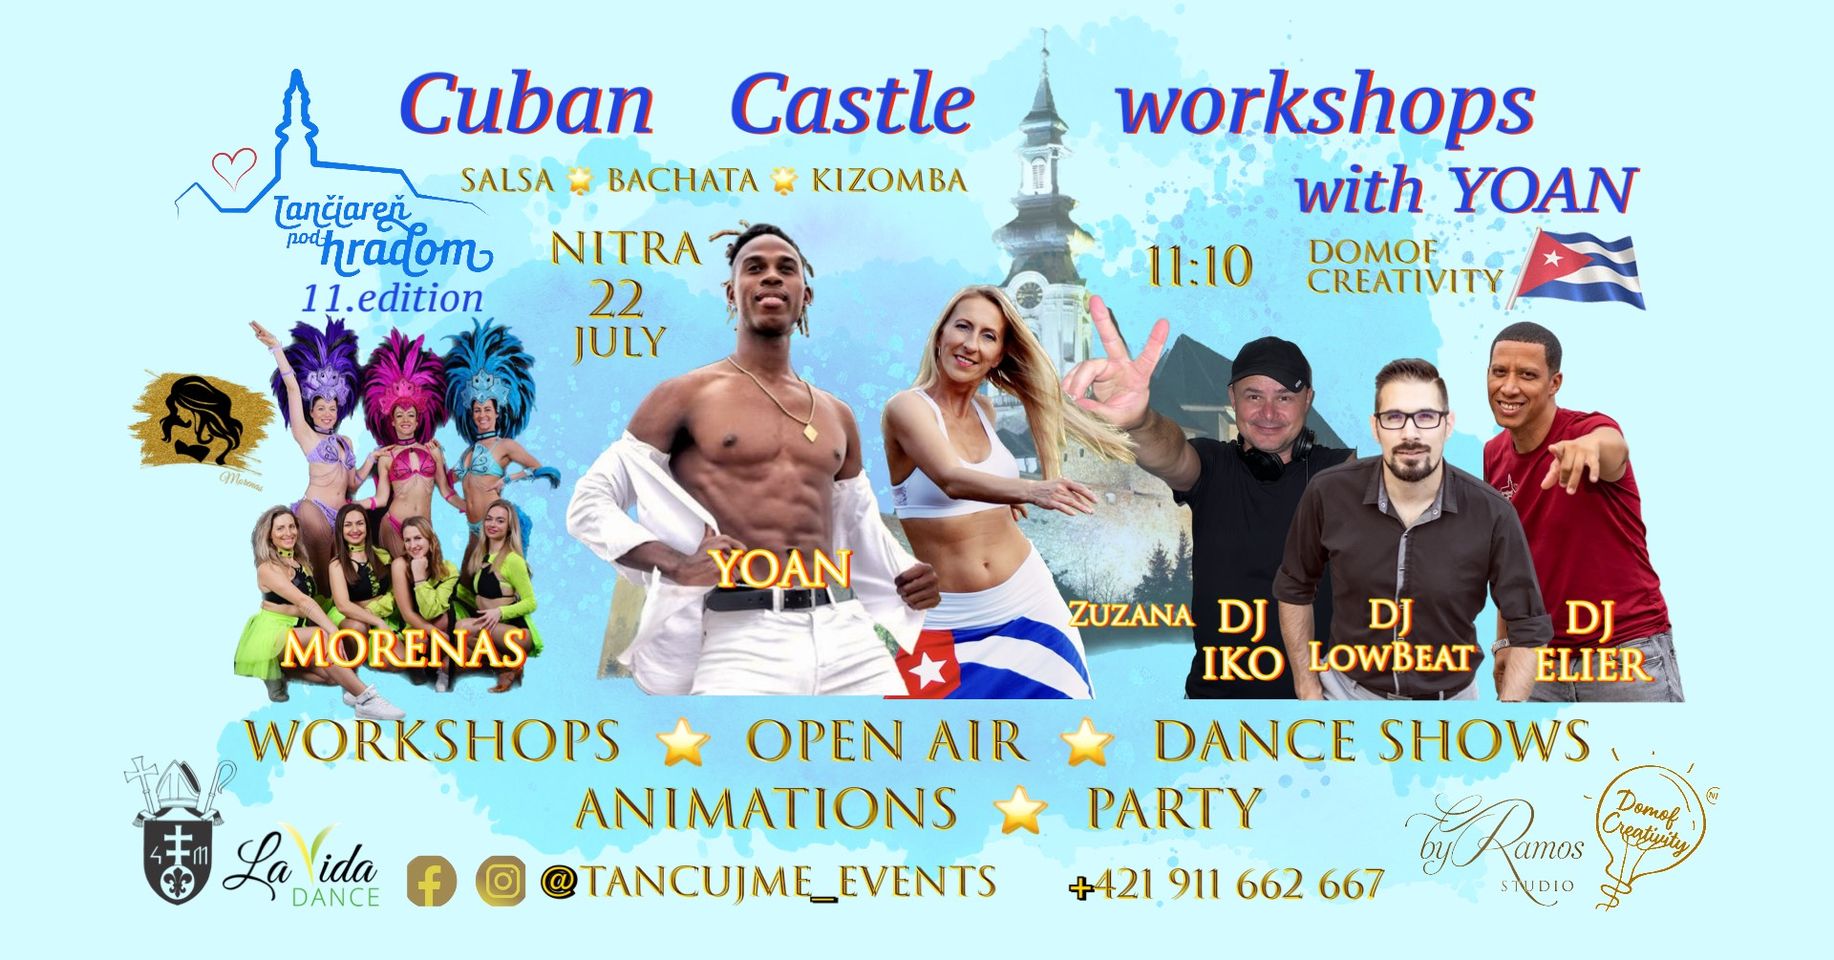 CUBAN CASTLE Workshops & Bootcamp Day with YOAN DOMOF creativity